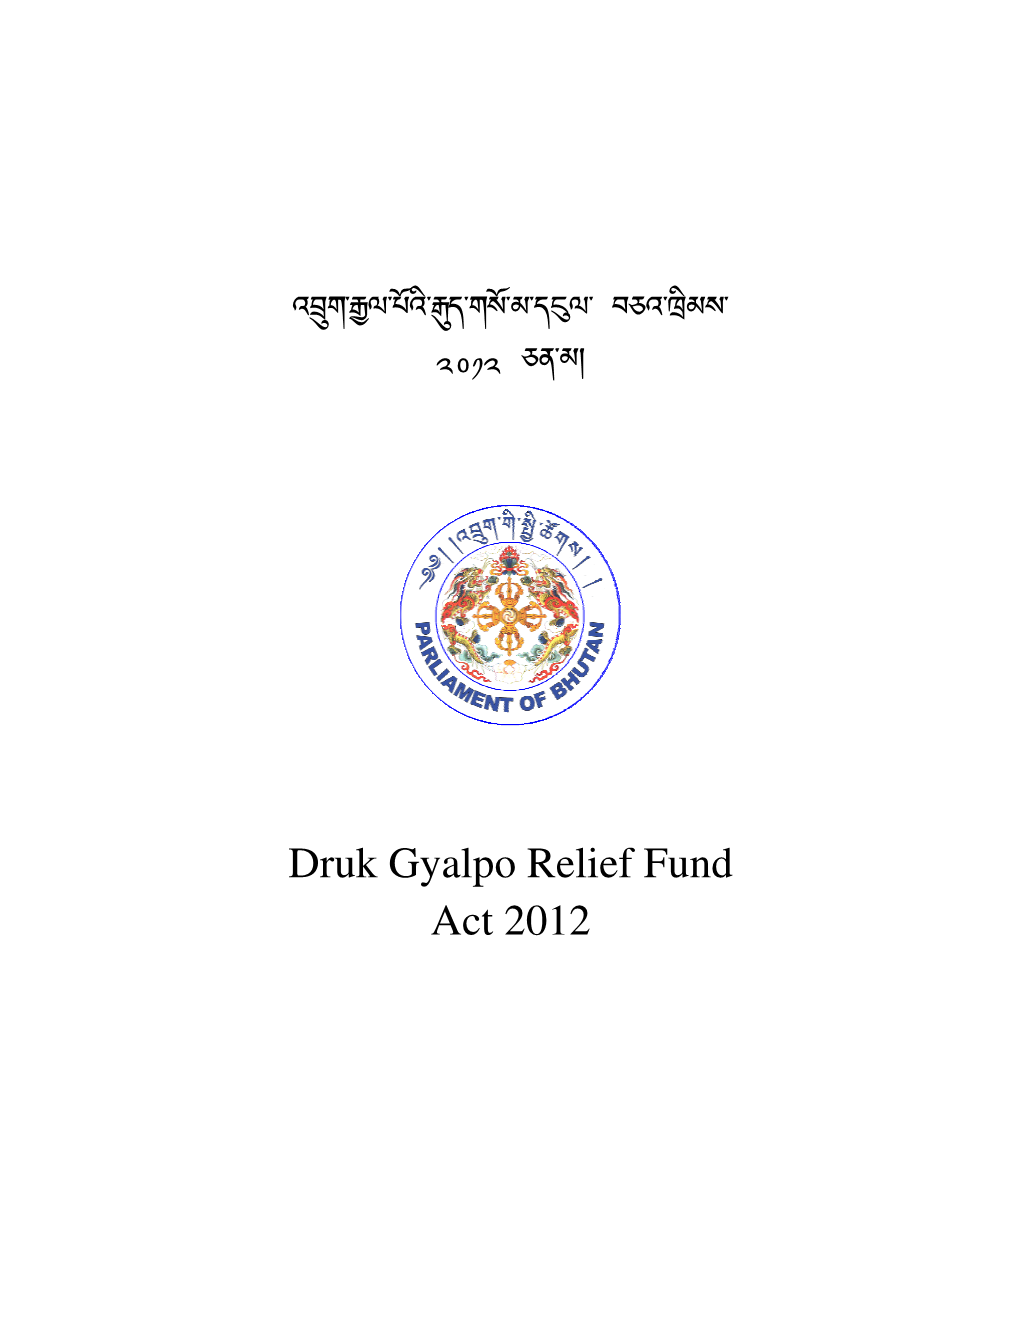 Druk Gyalpo Relief Fund Act 2012